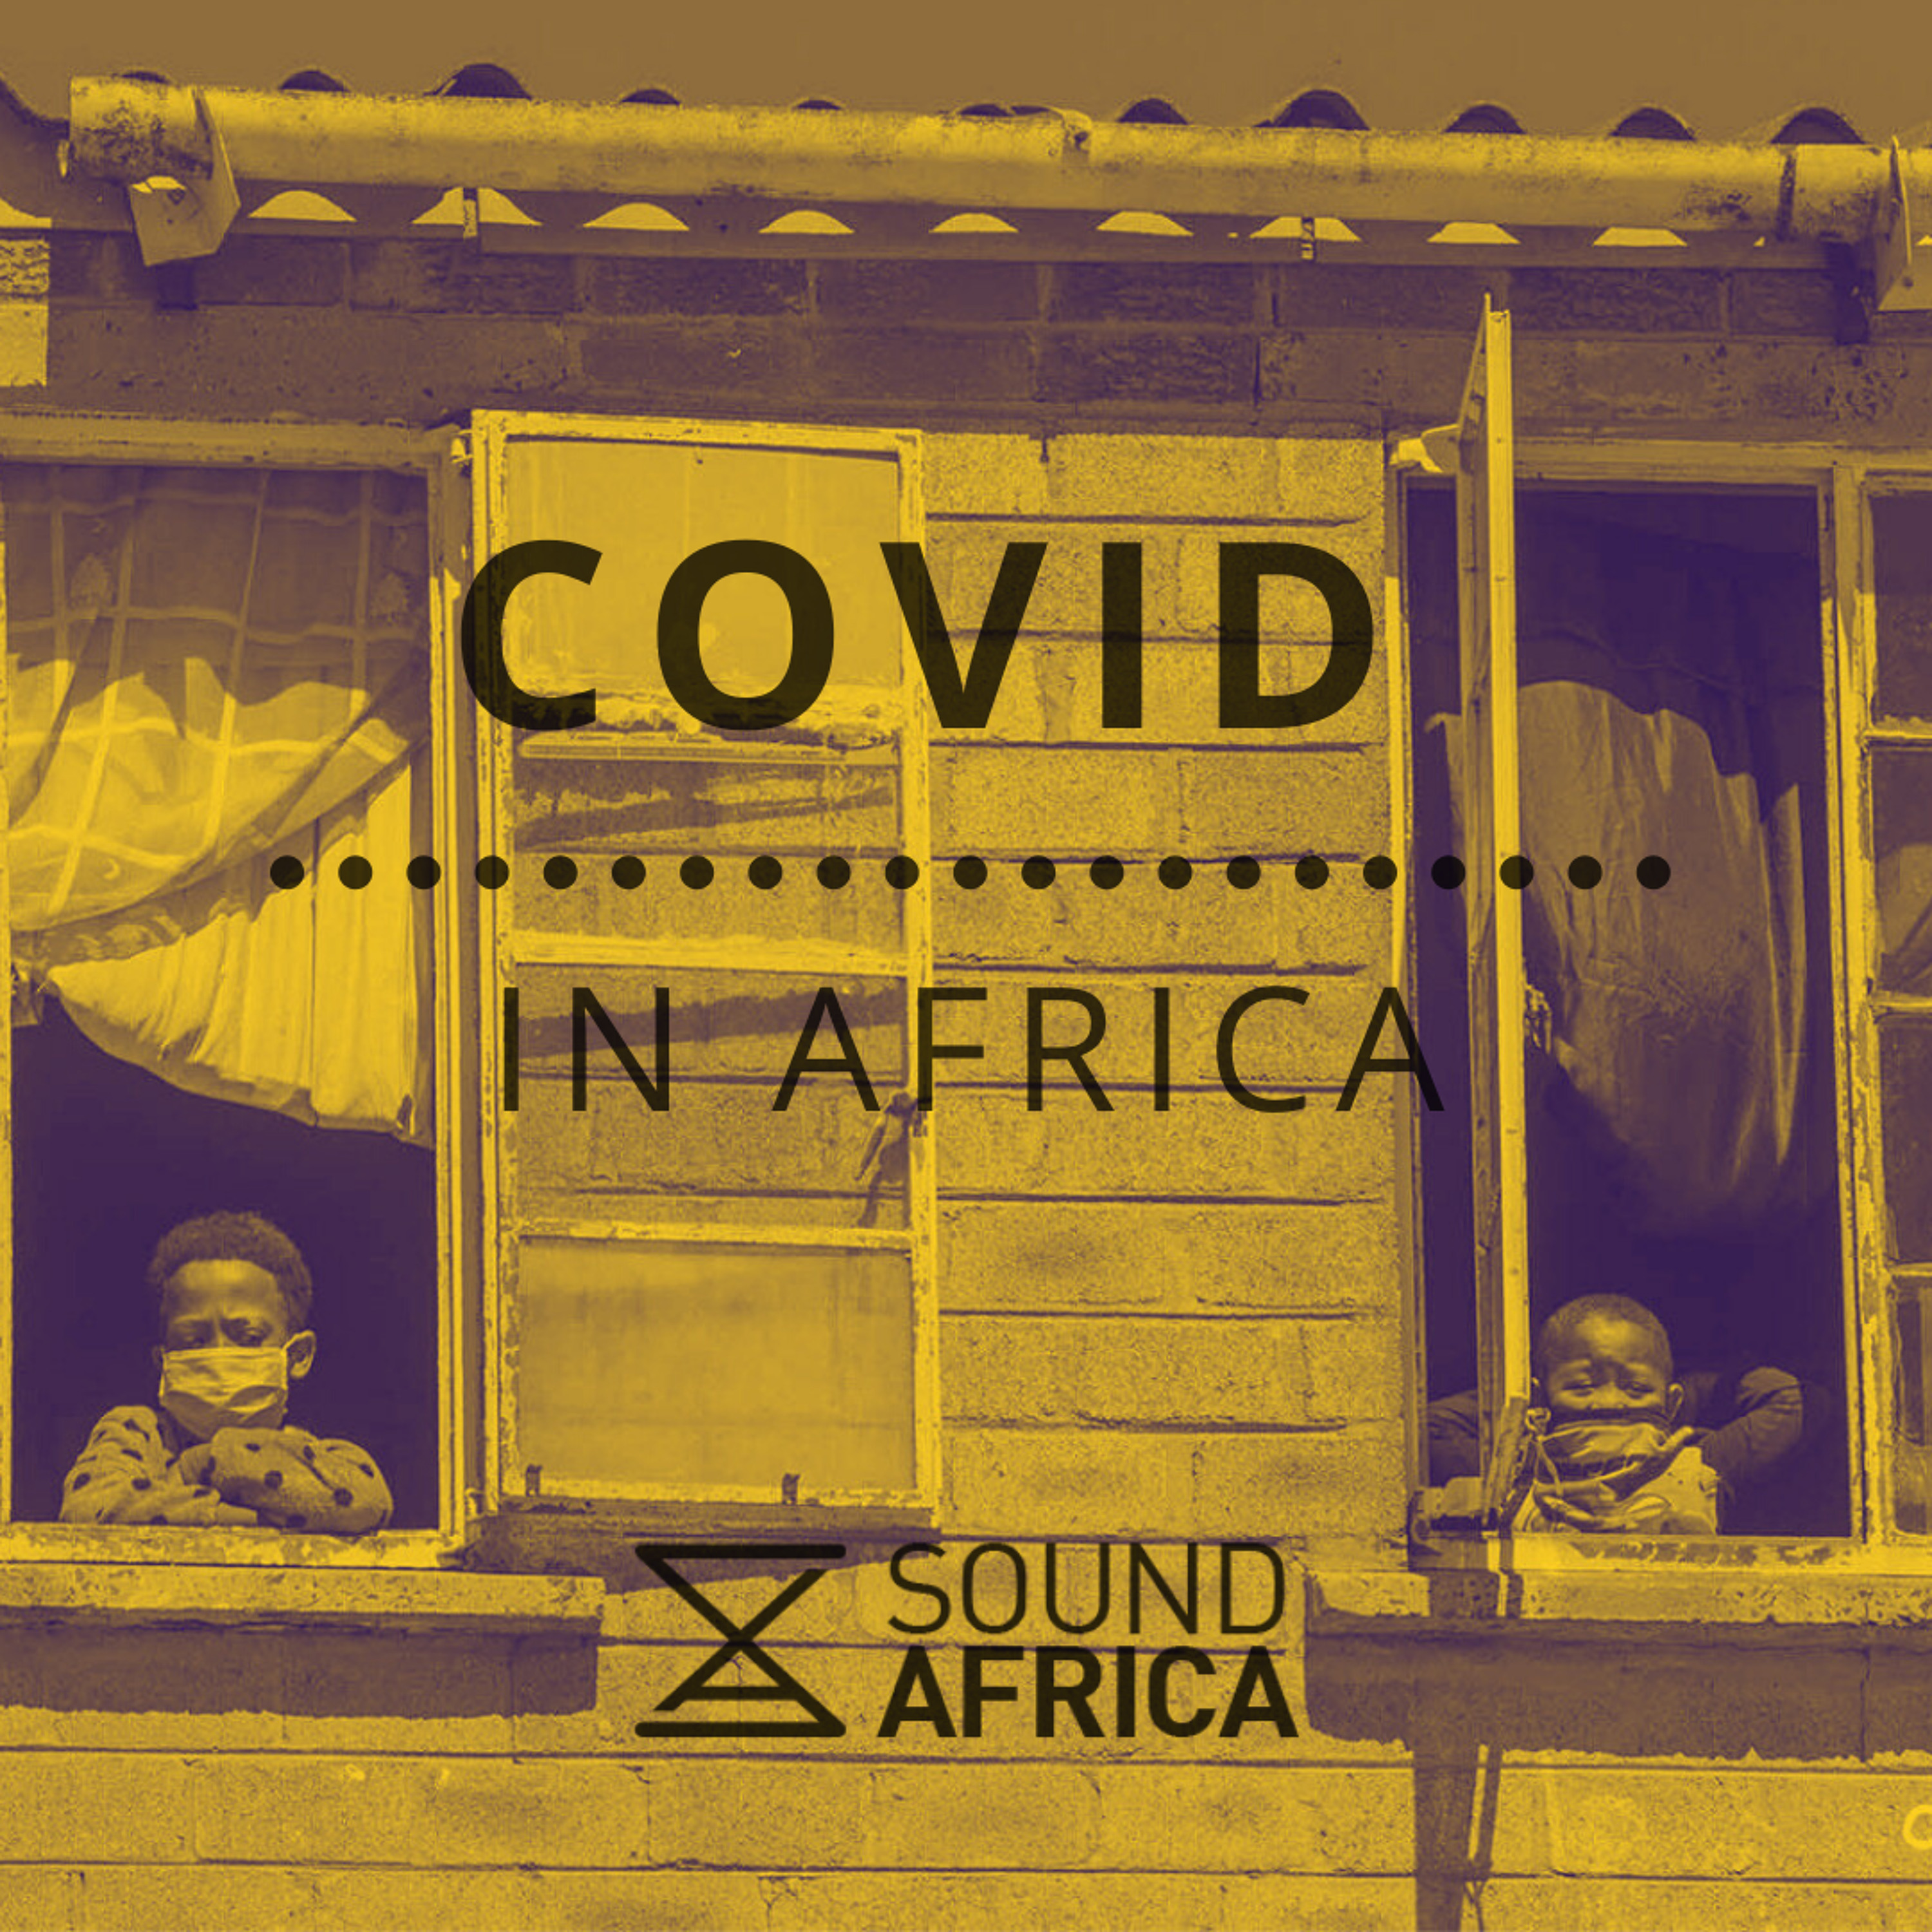 Covid in Africa - Episode 2